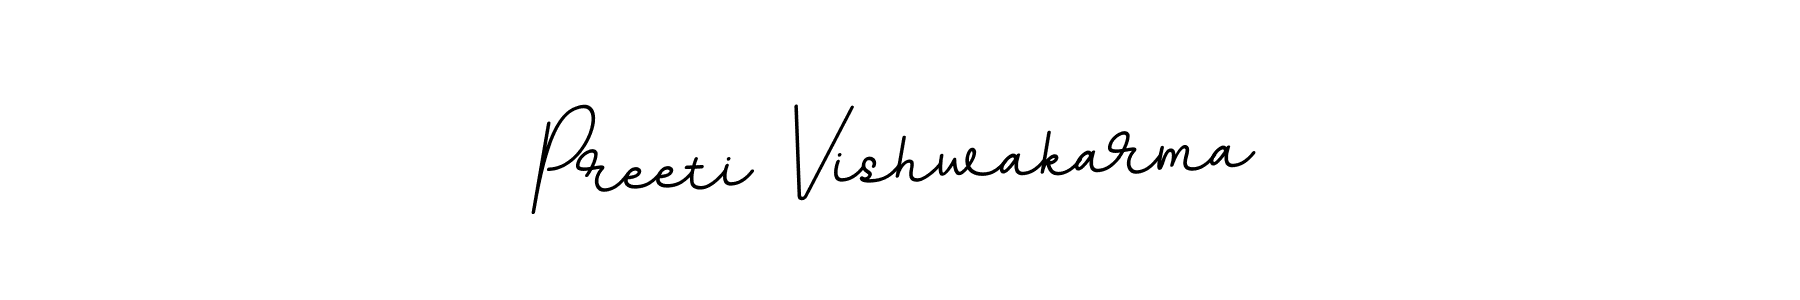 How to Draw Preeti Vishwakarma signature style? BallpointsItalic-DORy9 is a latest design signature styles for name Preeti Vishwakarma. Preeti Vishwakarma signature style 11 images and pictures png